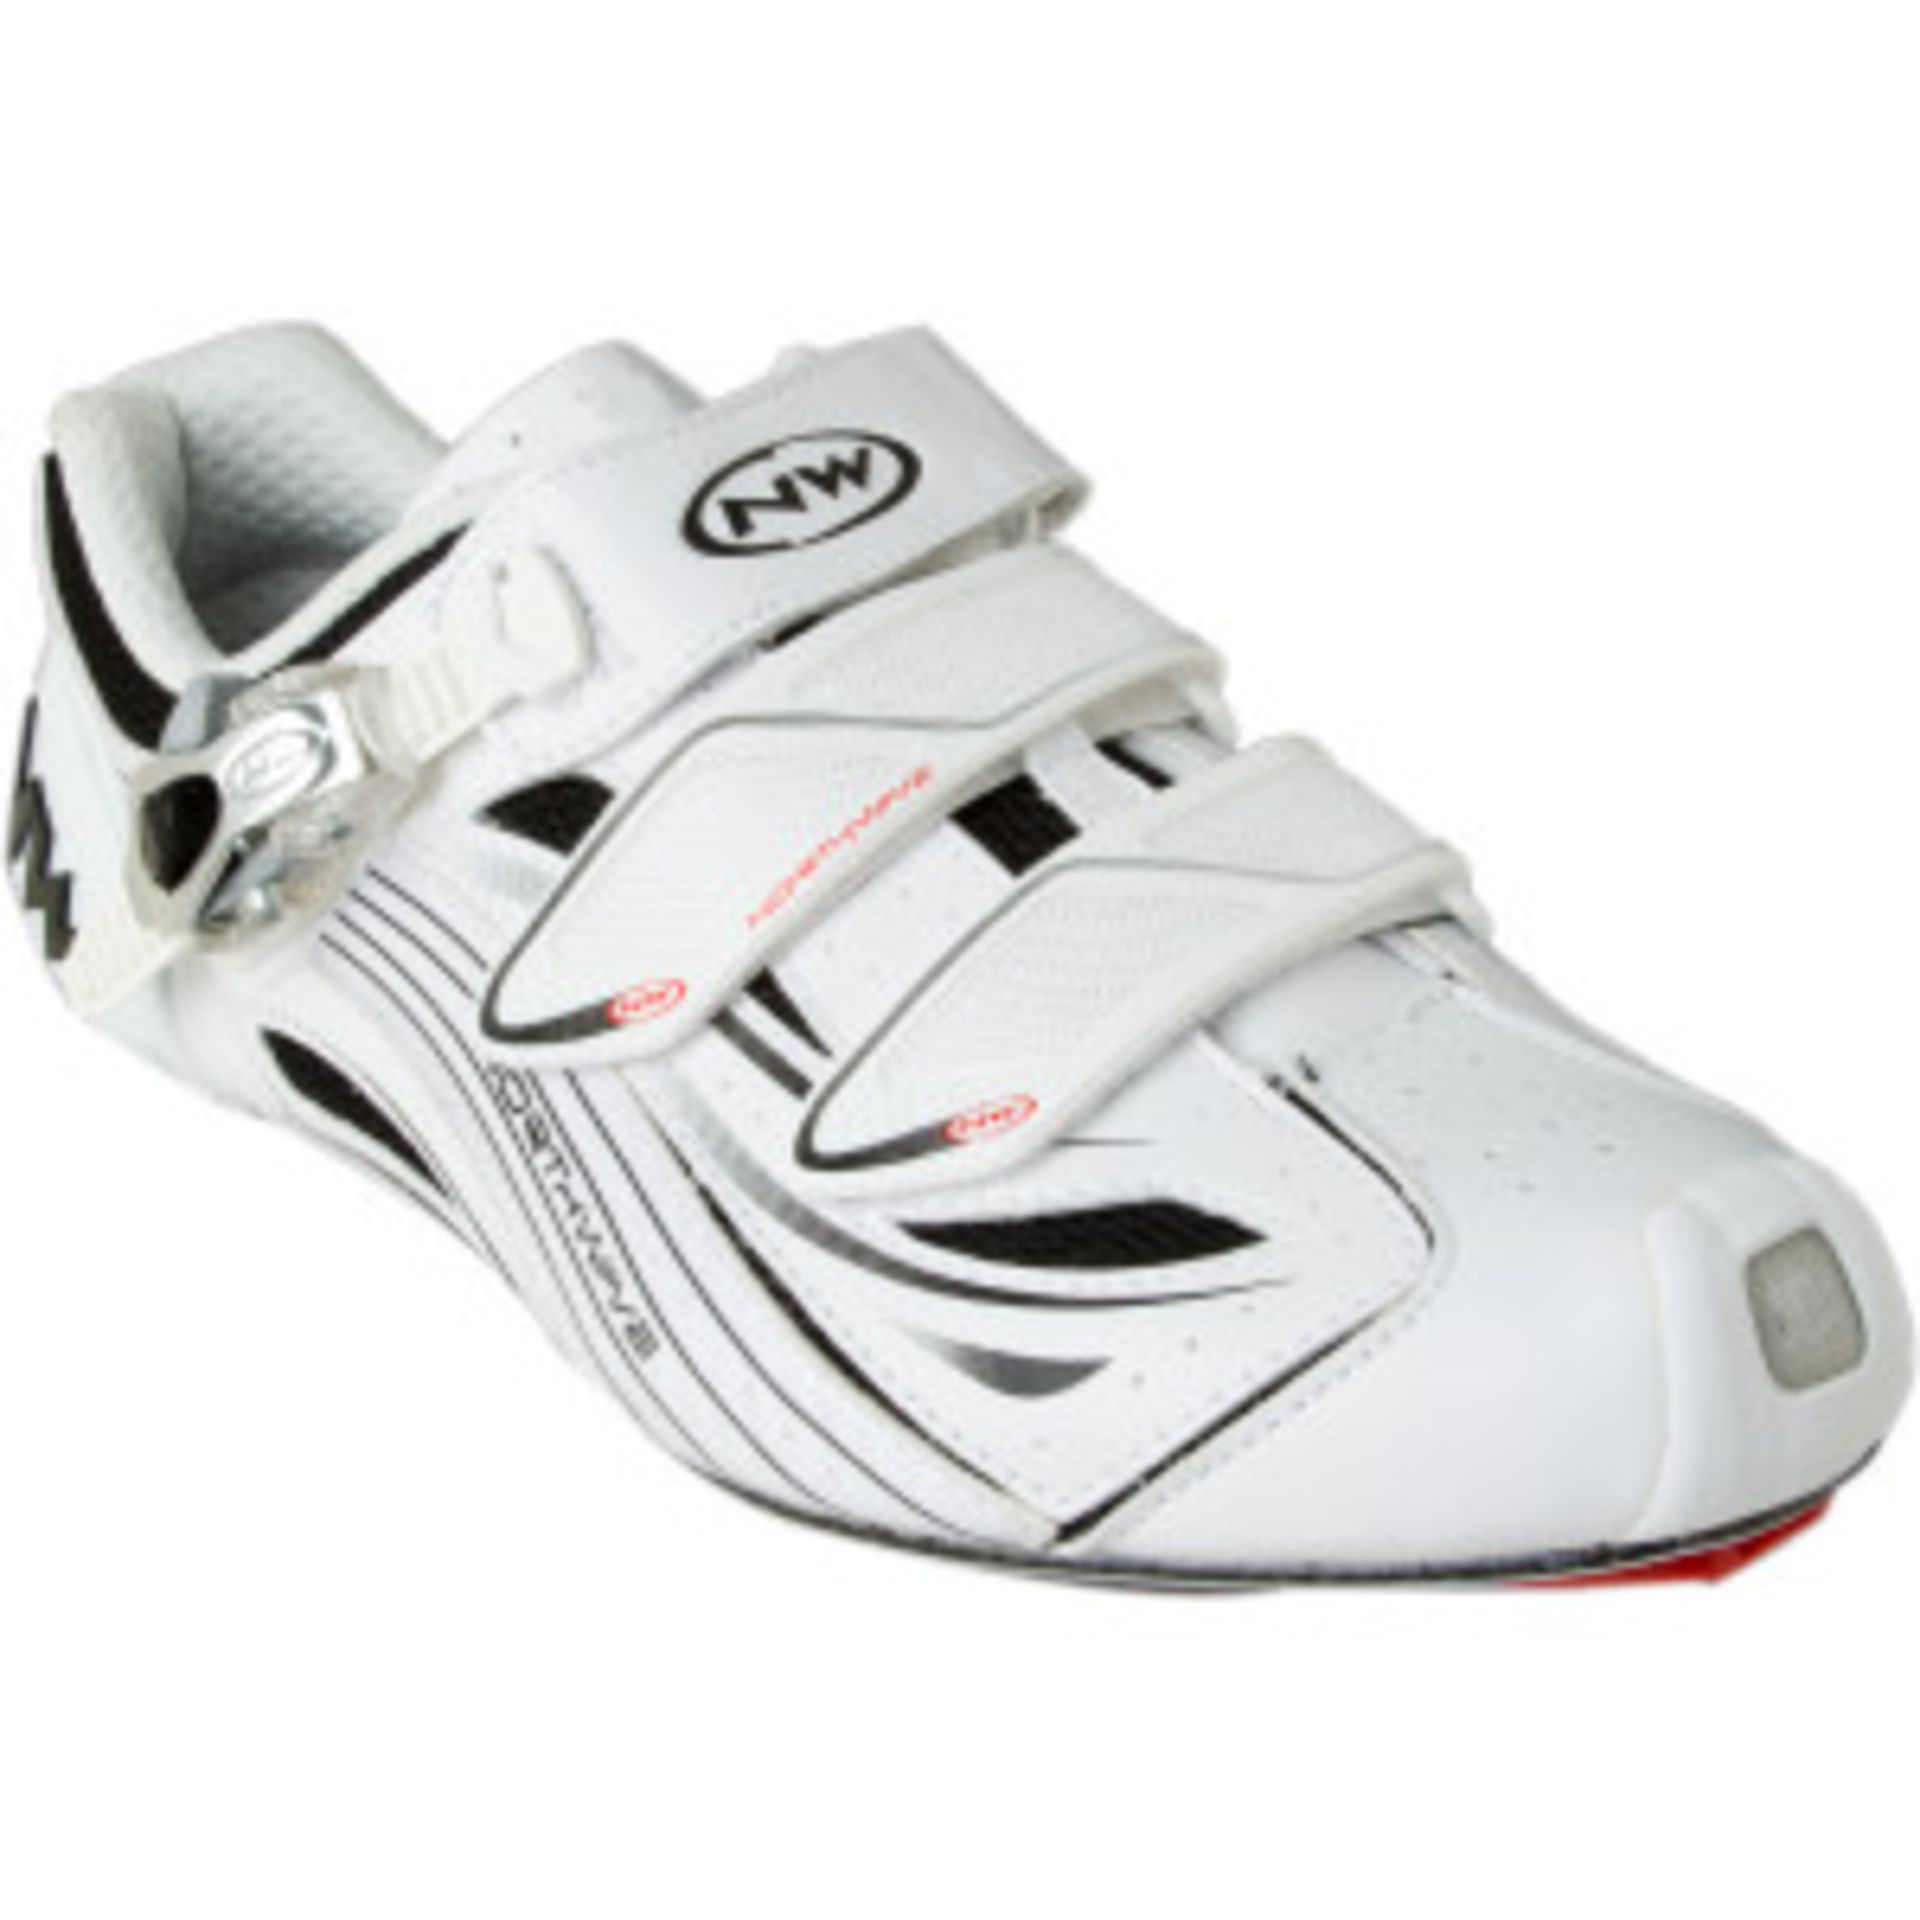 NorthWave Typhoon Evo SBS White Cycling Shoes UK7.5 RRP £164.99